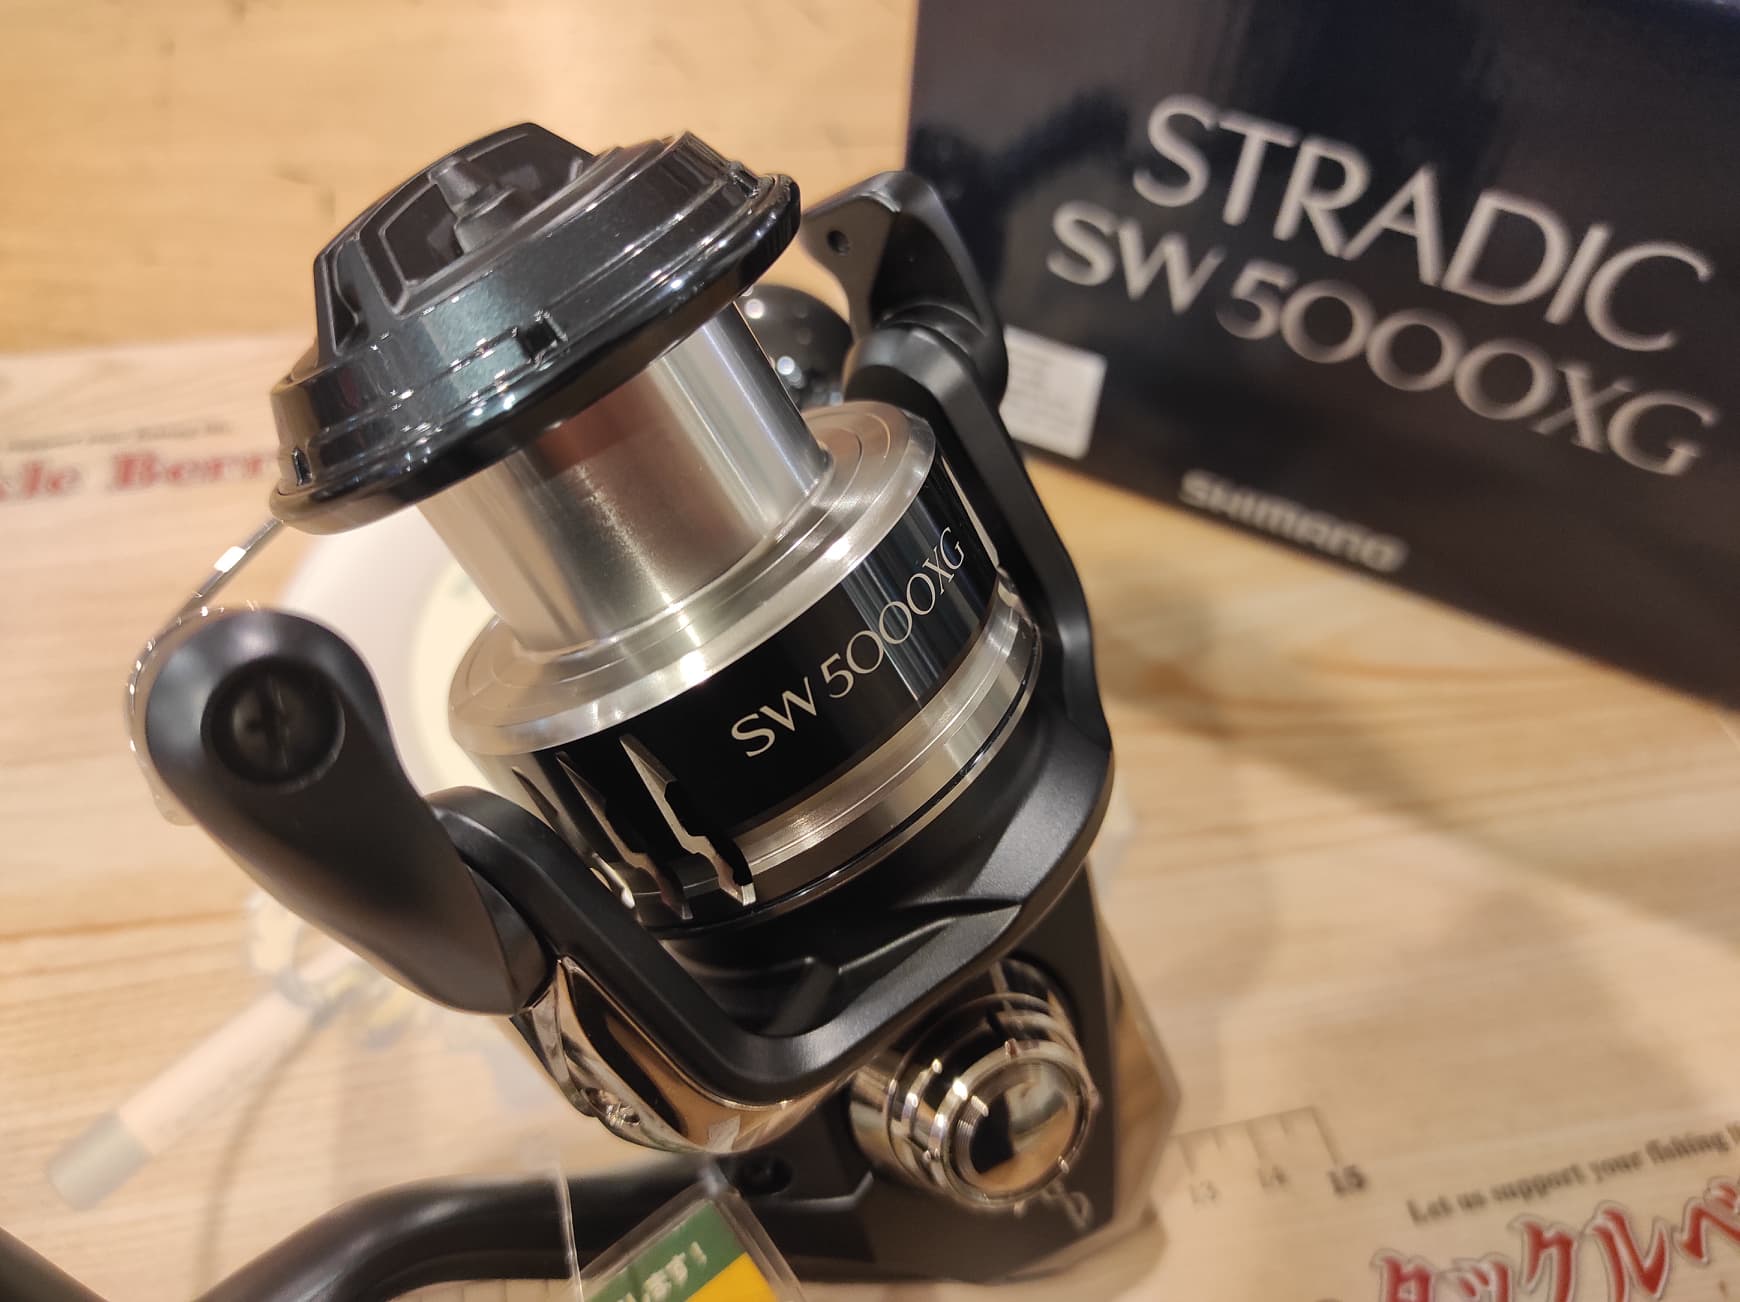 Fishing Reels Shimano Stradic Sw 5000xg